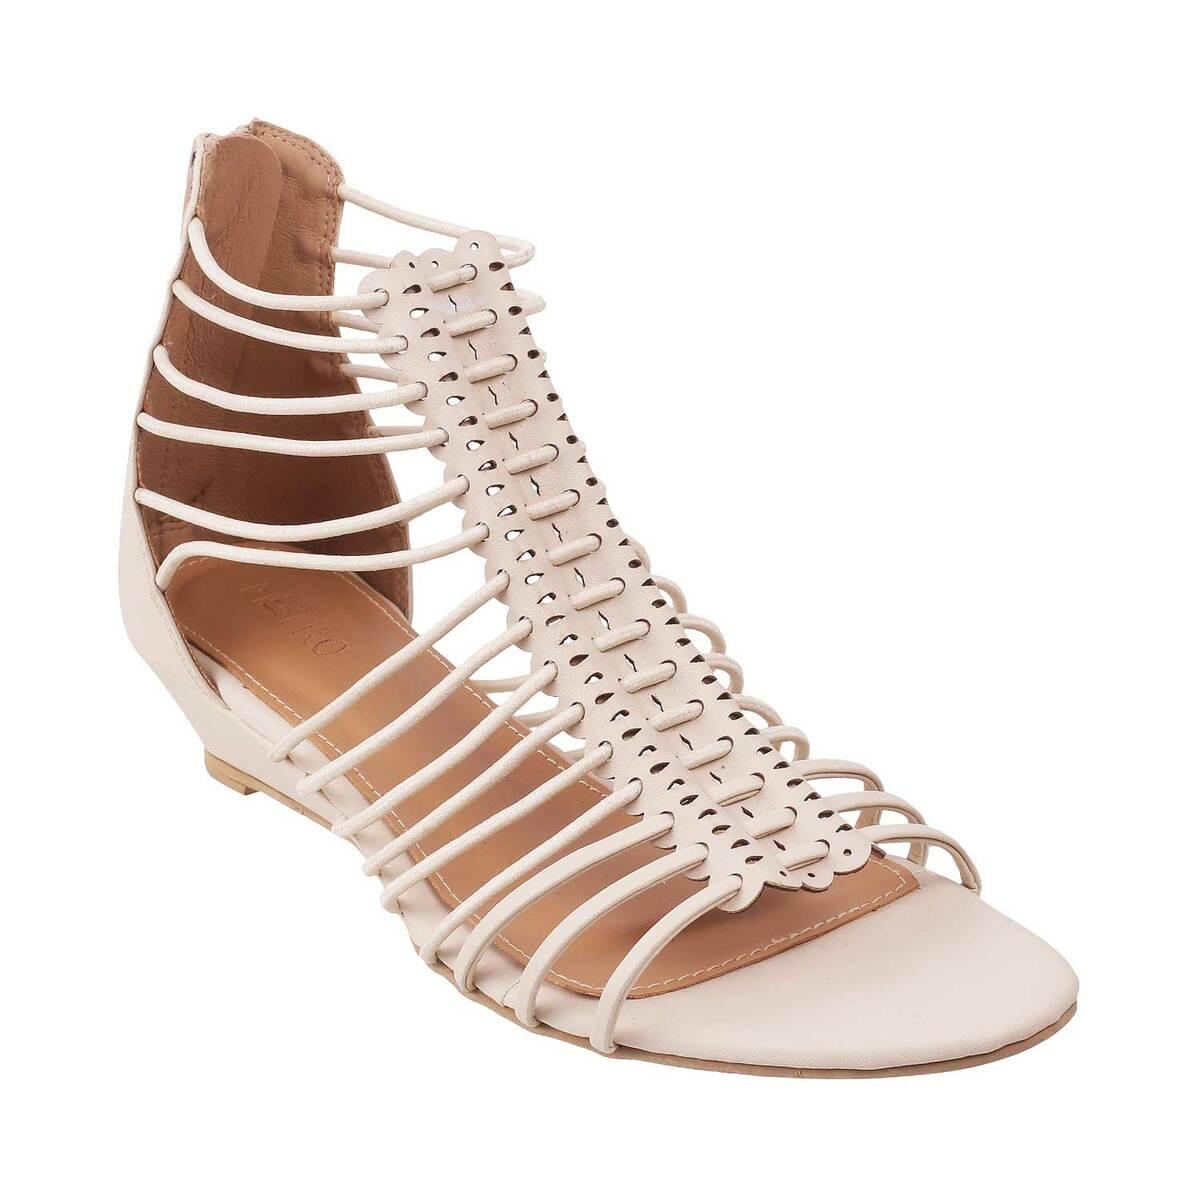 Buy Women Beige Casual Gladiators Online | SKU: 33-1405-20-36-Metro Shoes